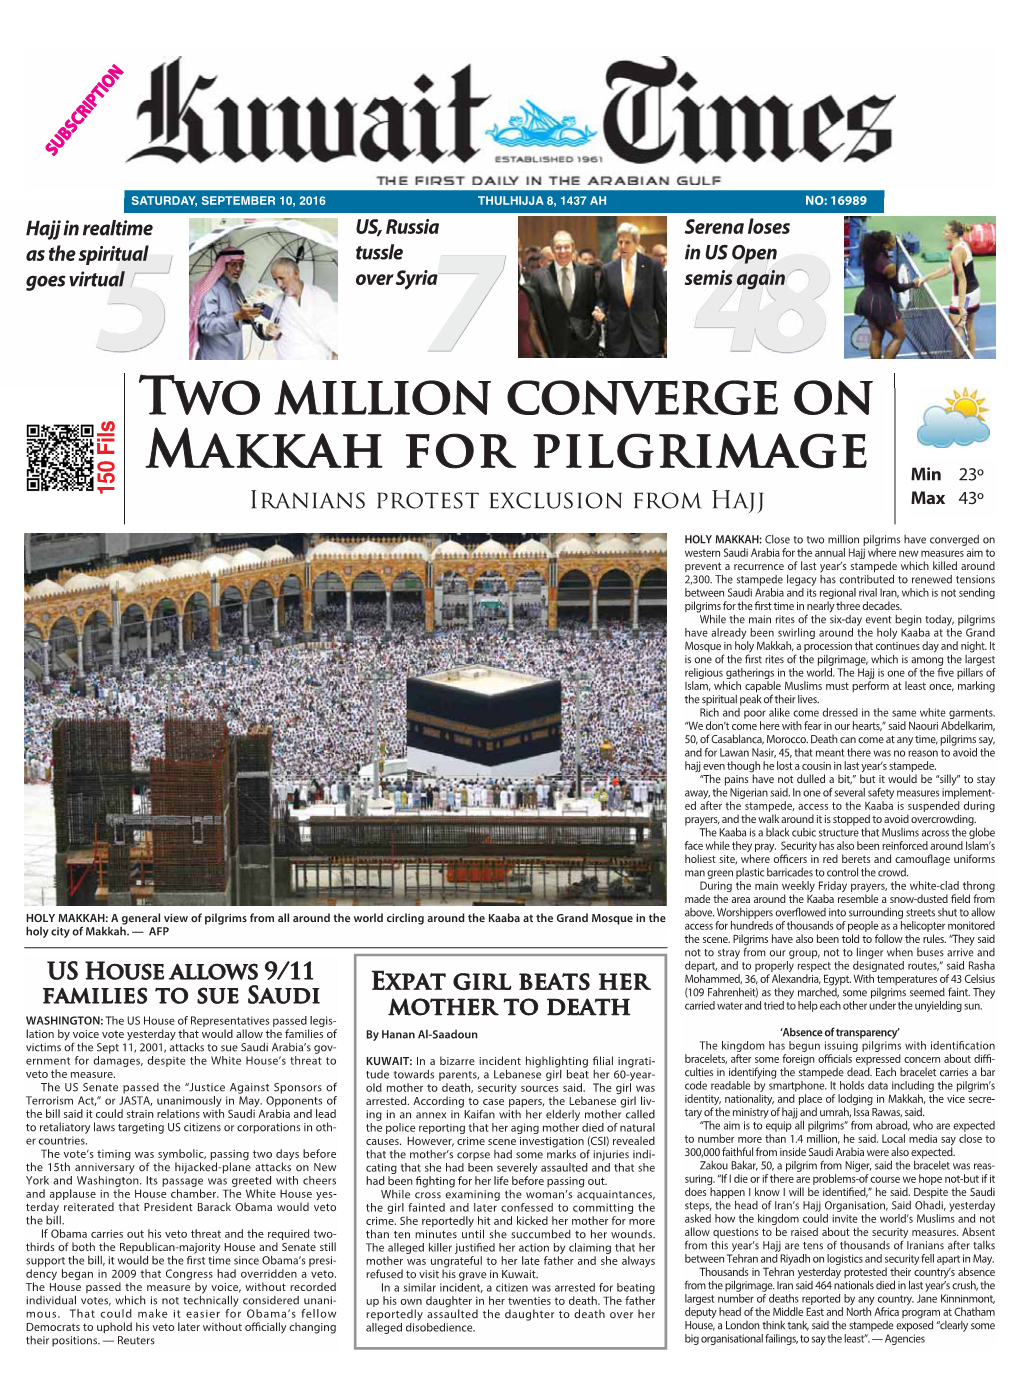 Two Million Converge on Makkah for Pilgrimage